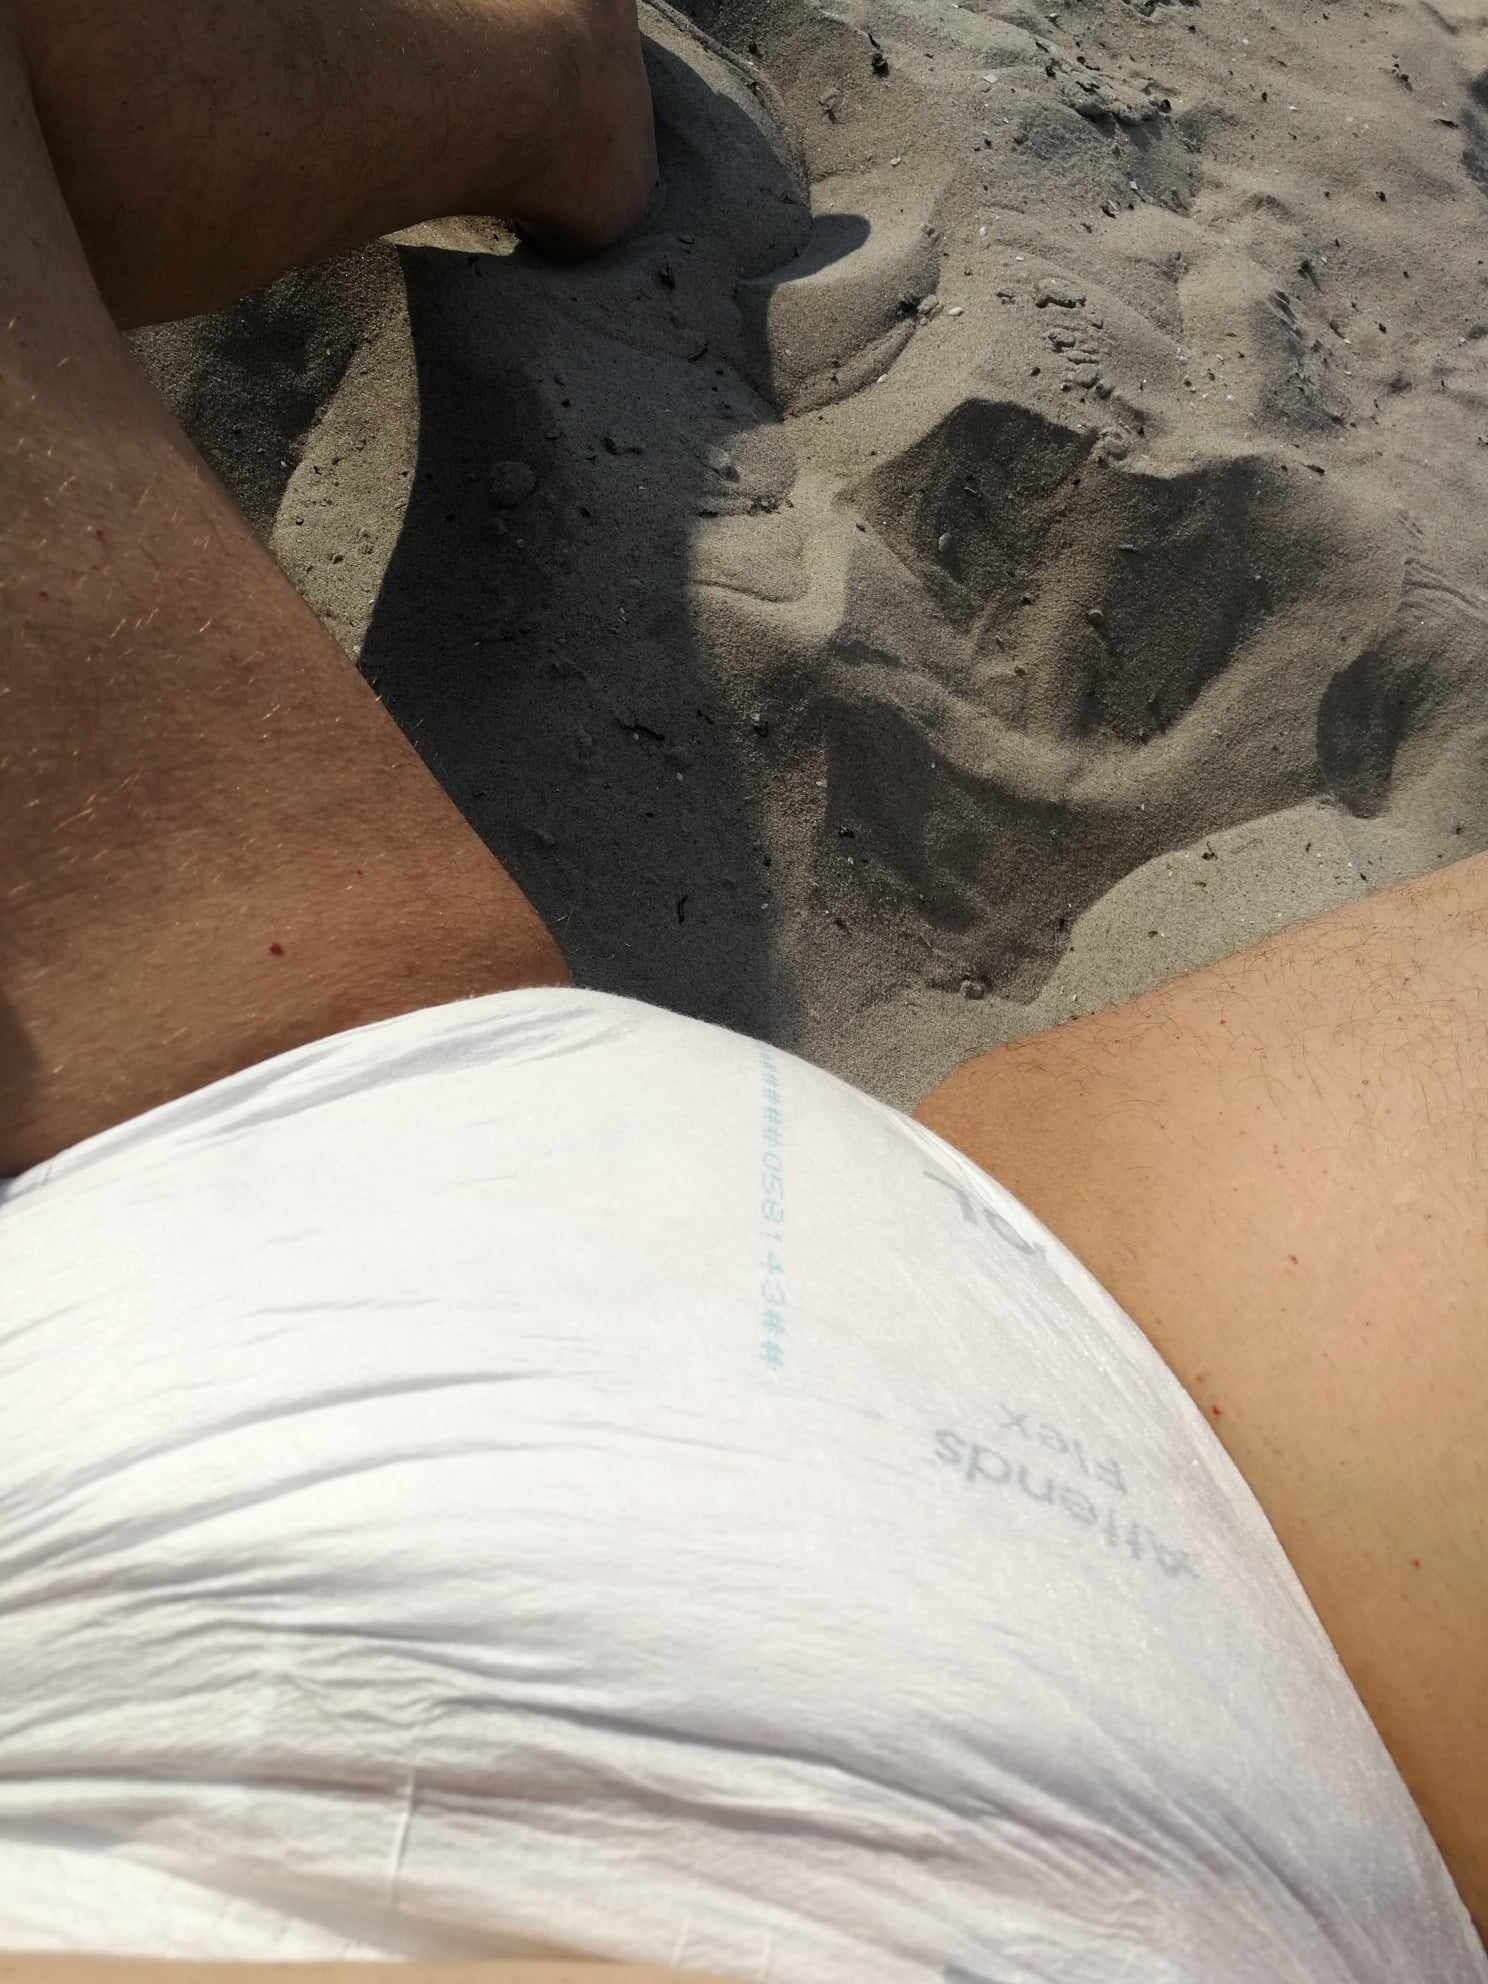 Diaper on public beach #11